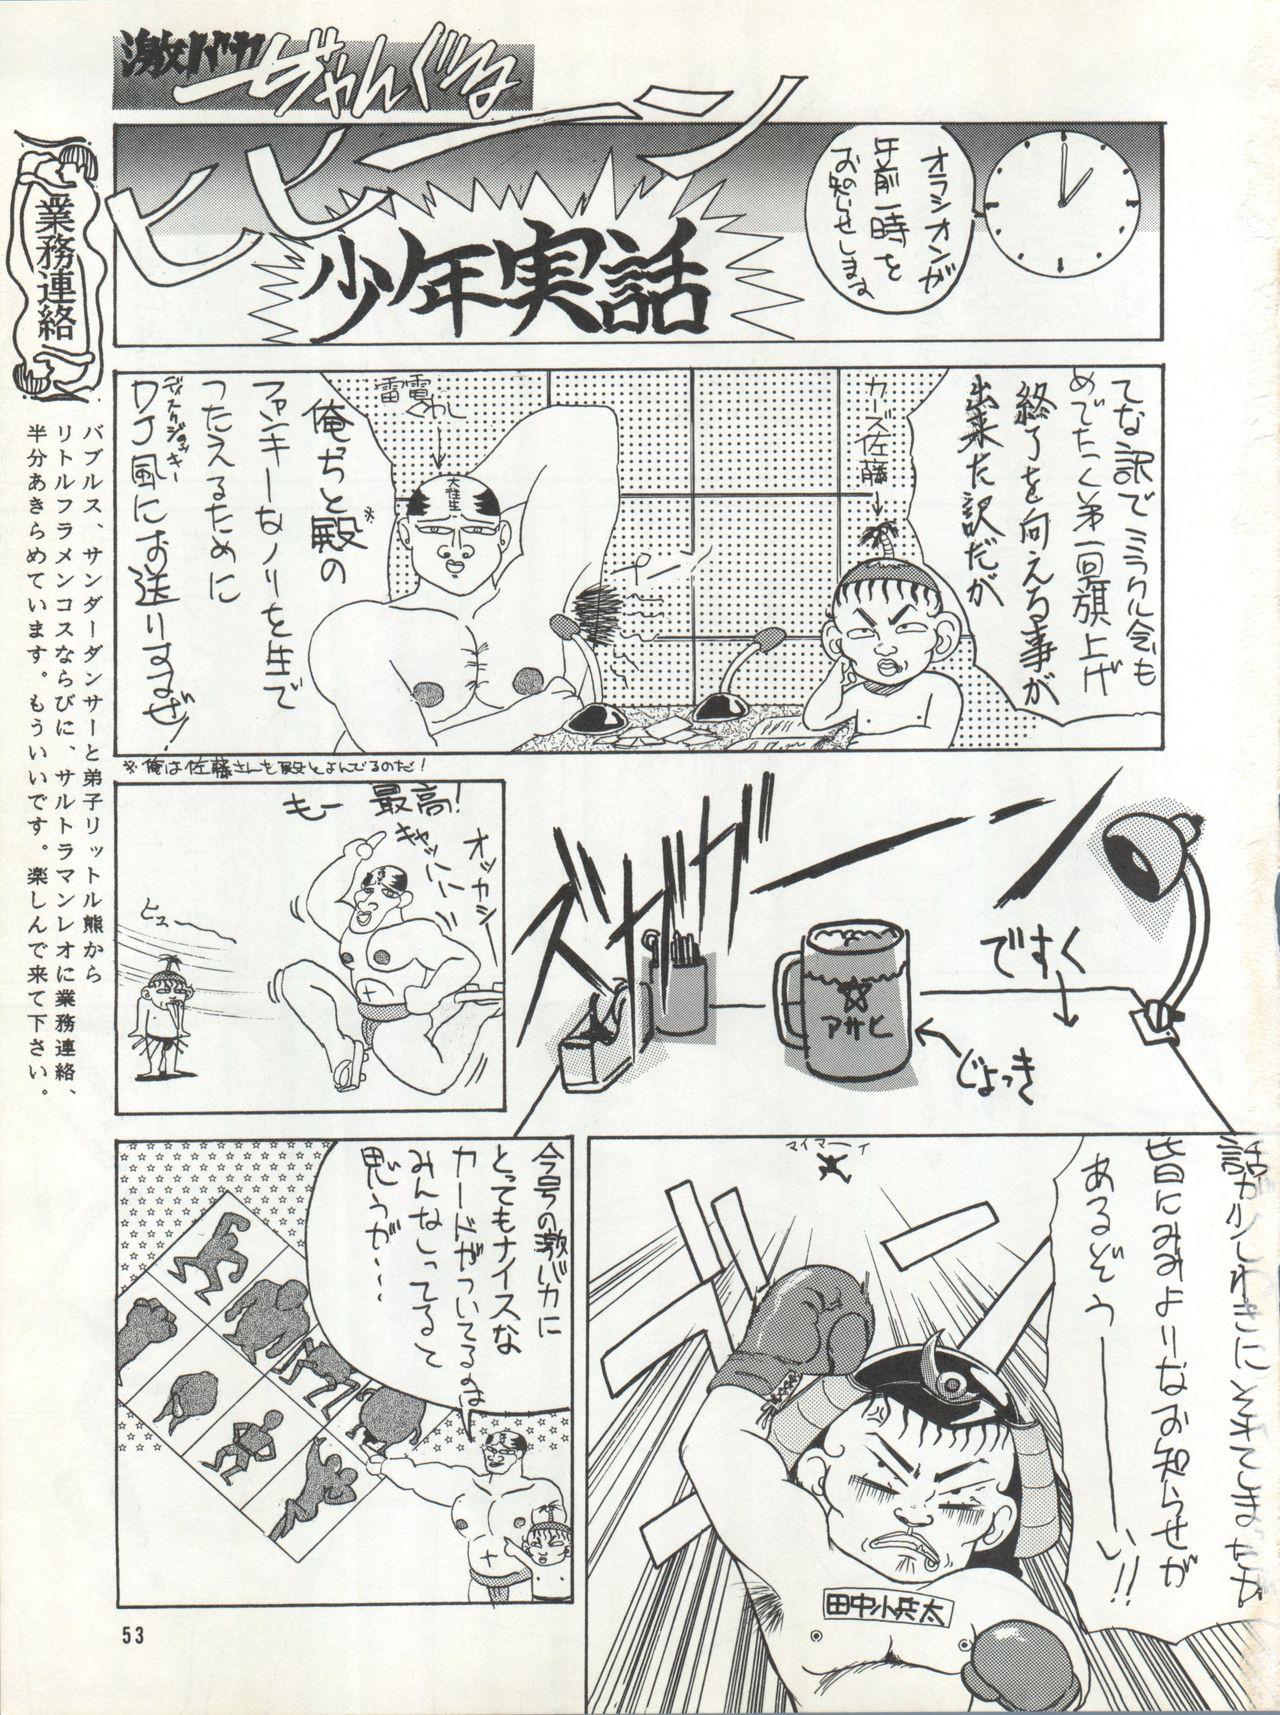 Geki Baka Jungle Vol. 1 52